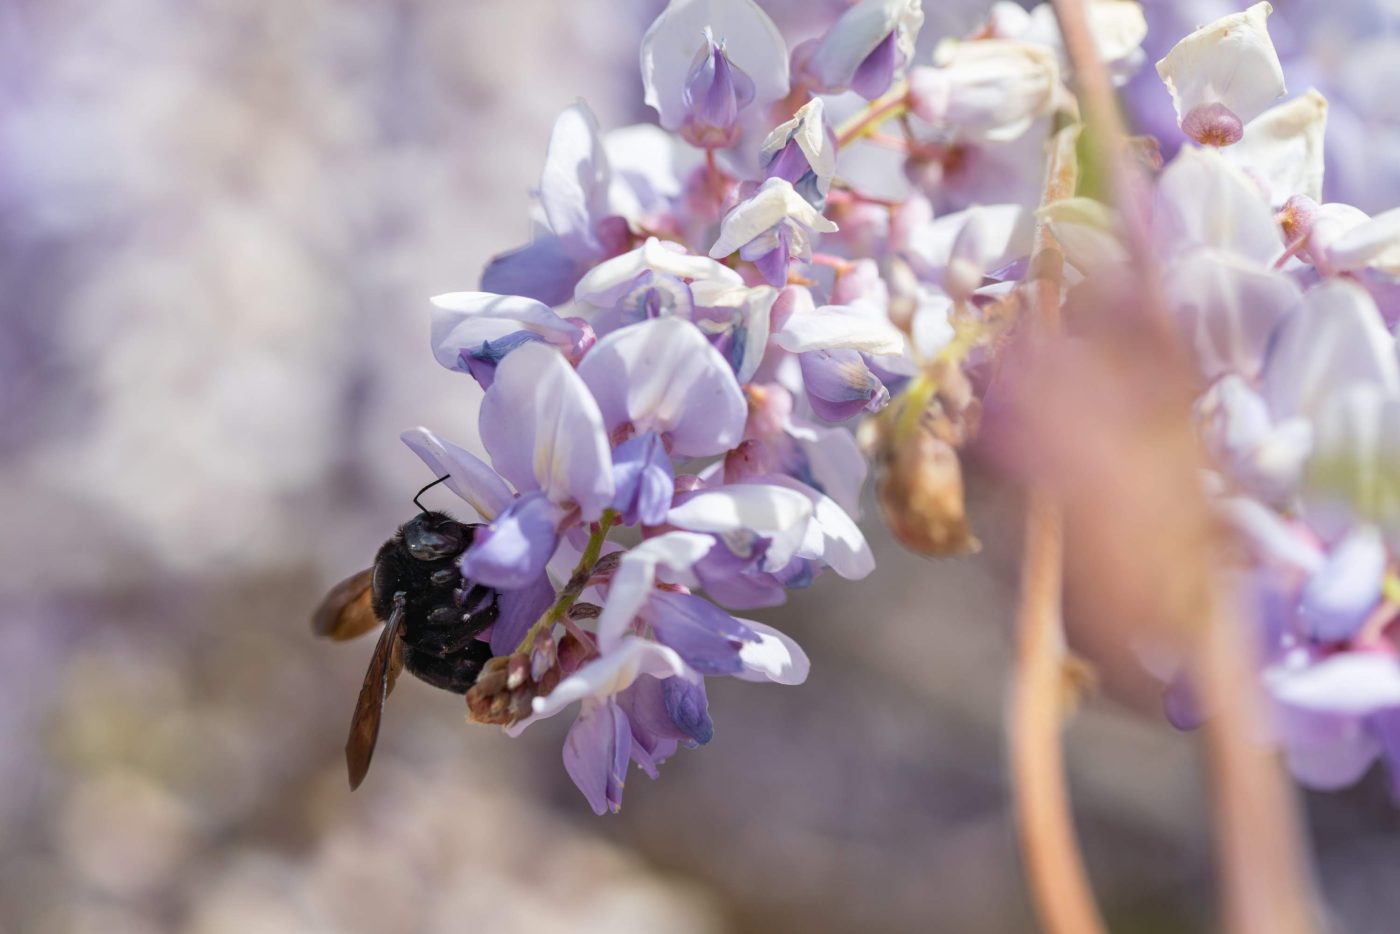 Carpenter bee on wisteria plant